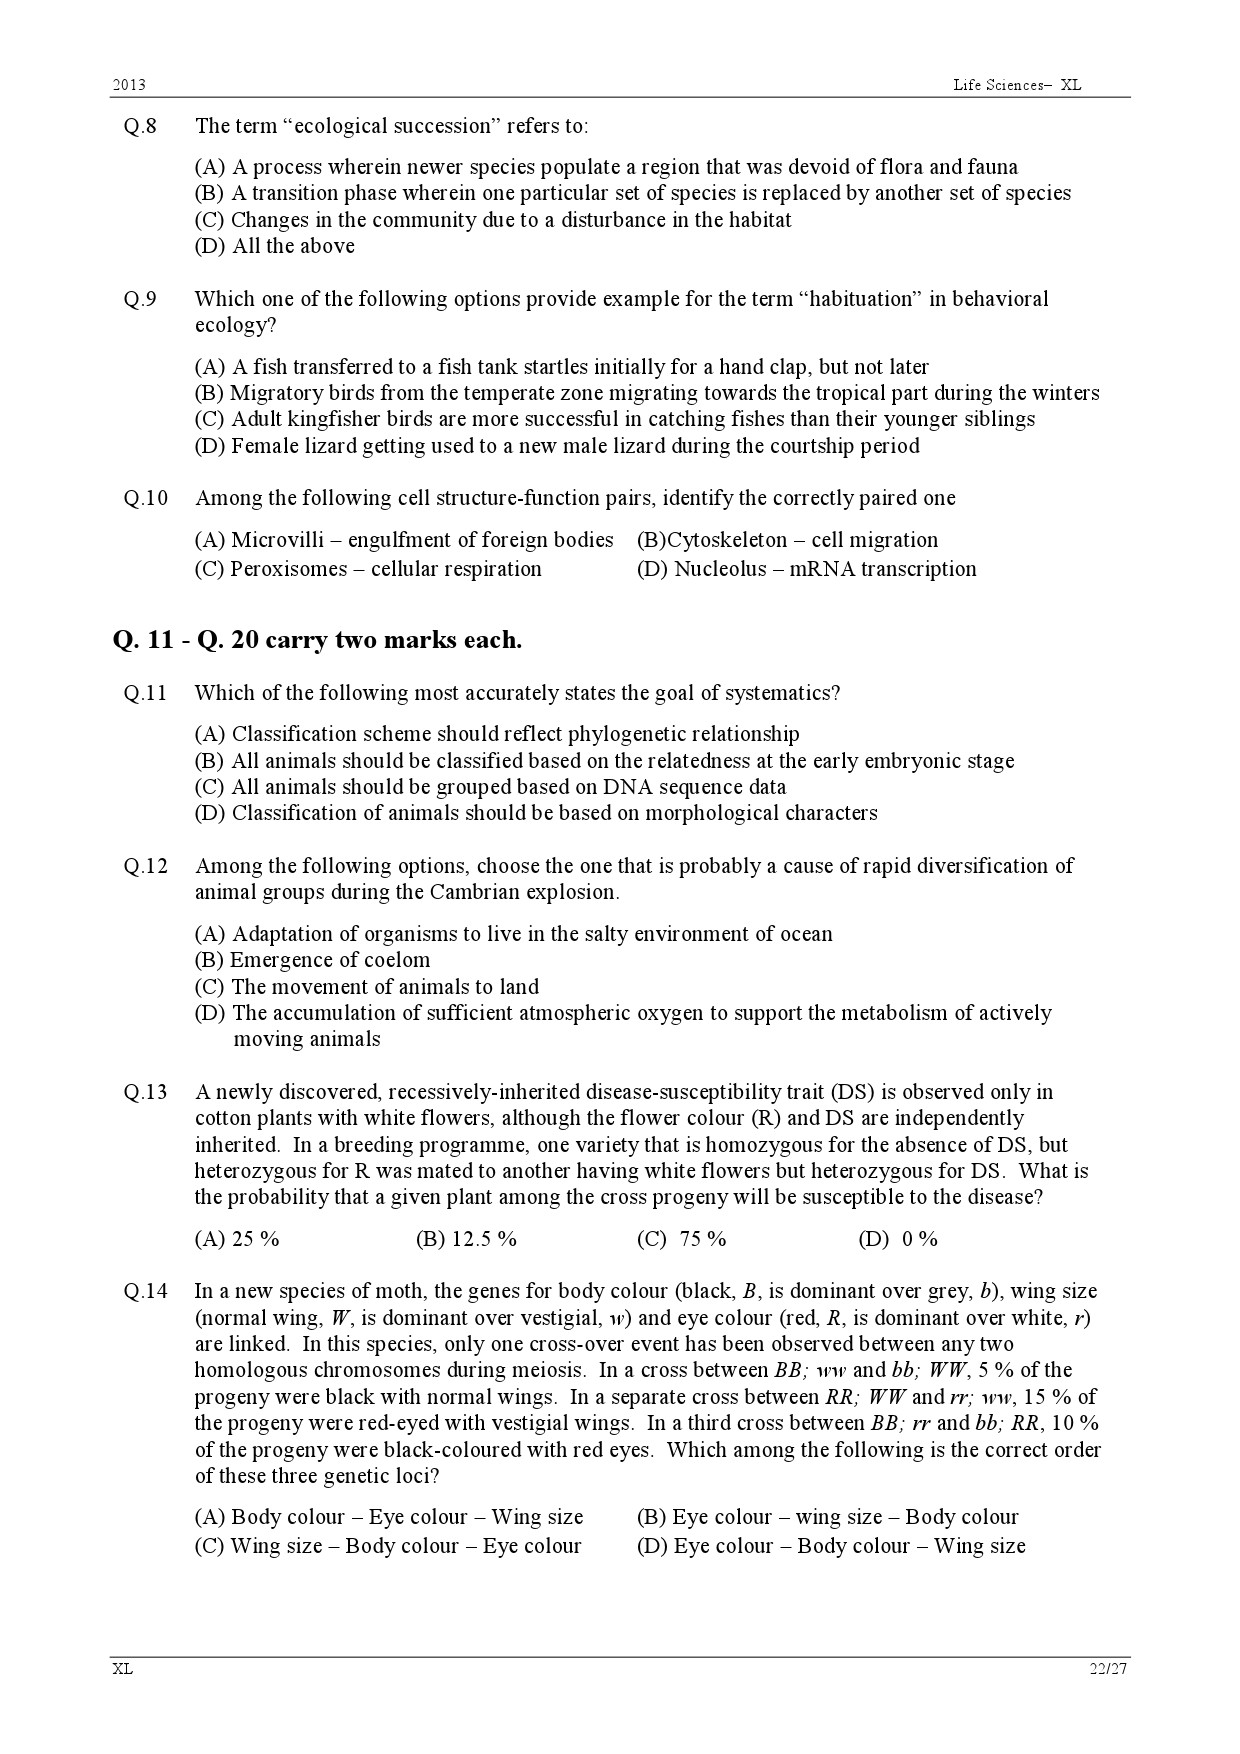 GATE Exam Question Paper 2013 Life Sciences 22